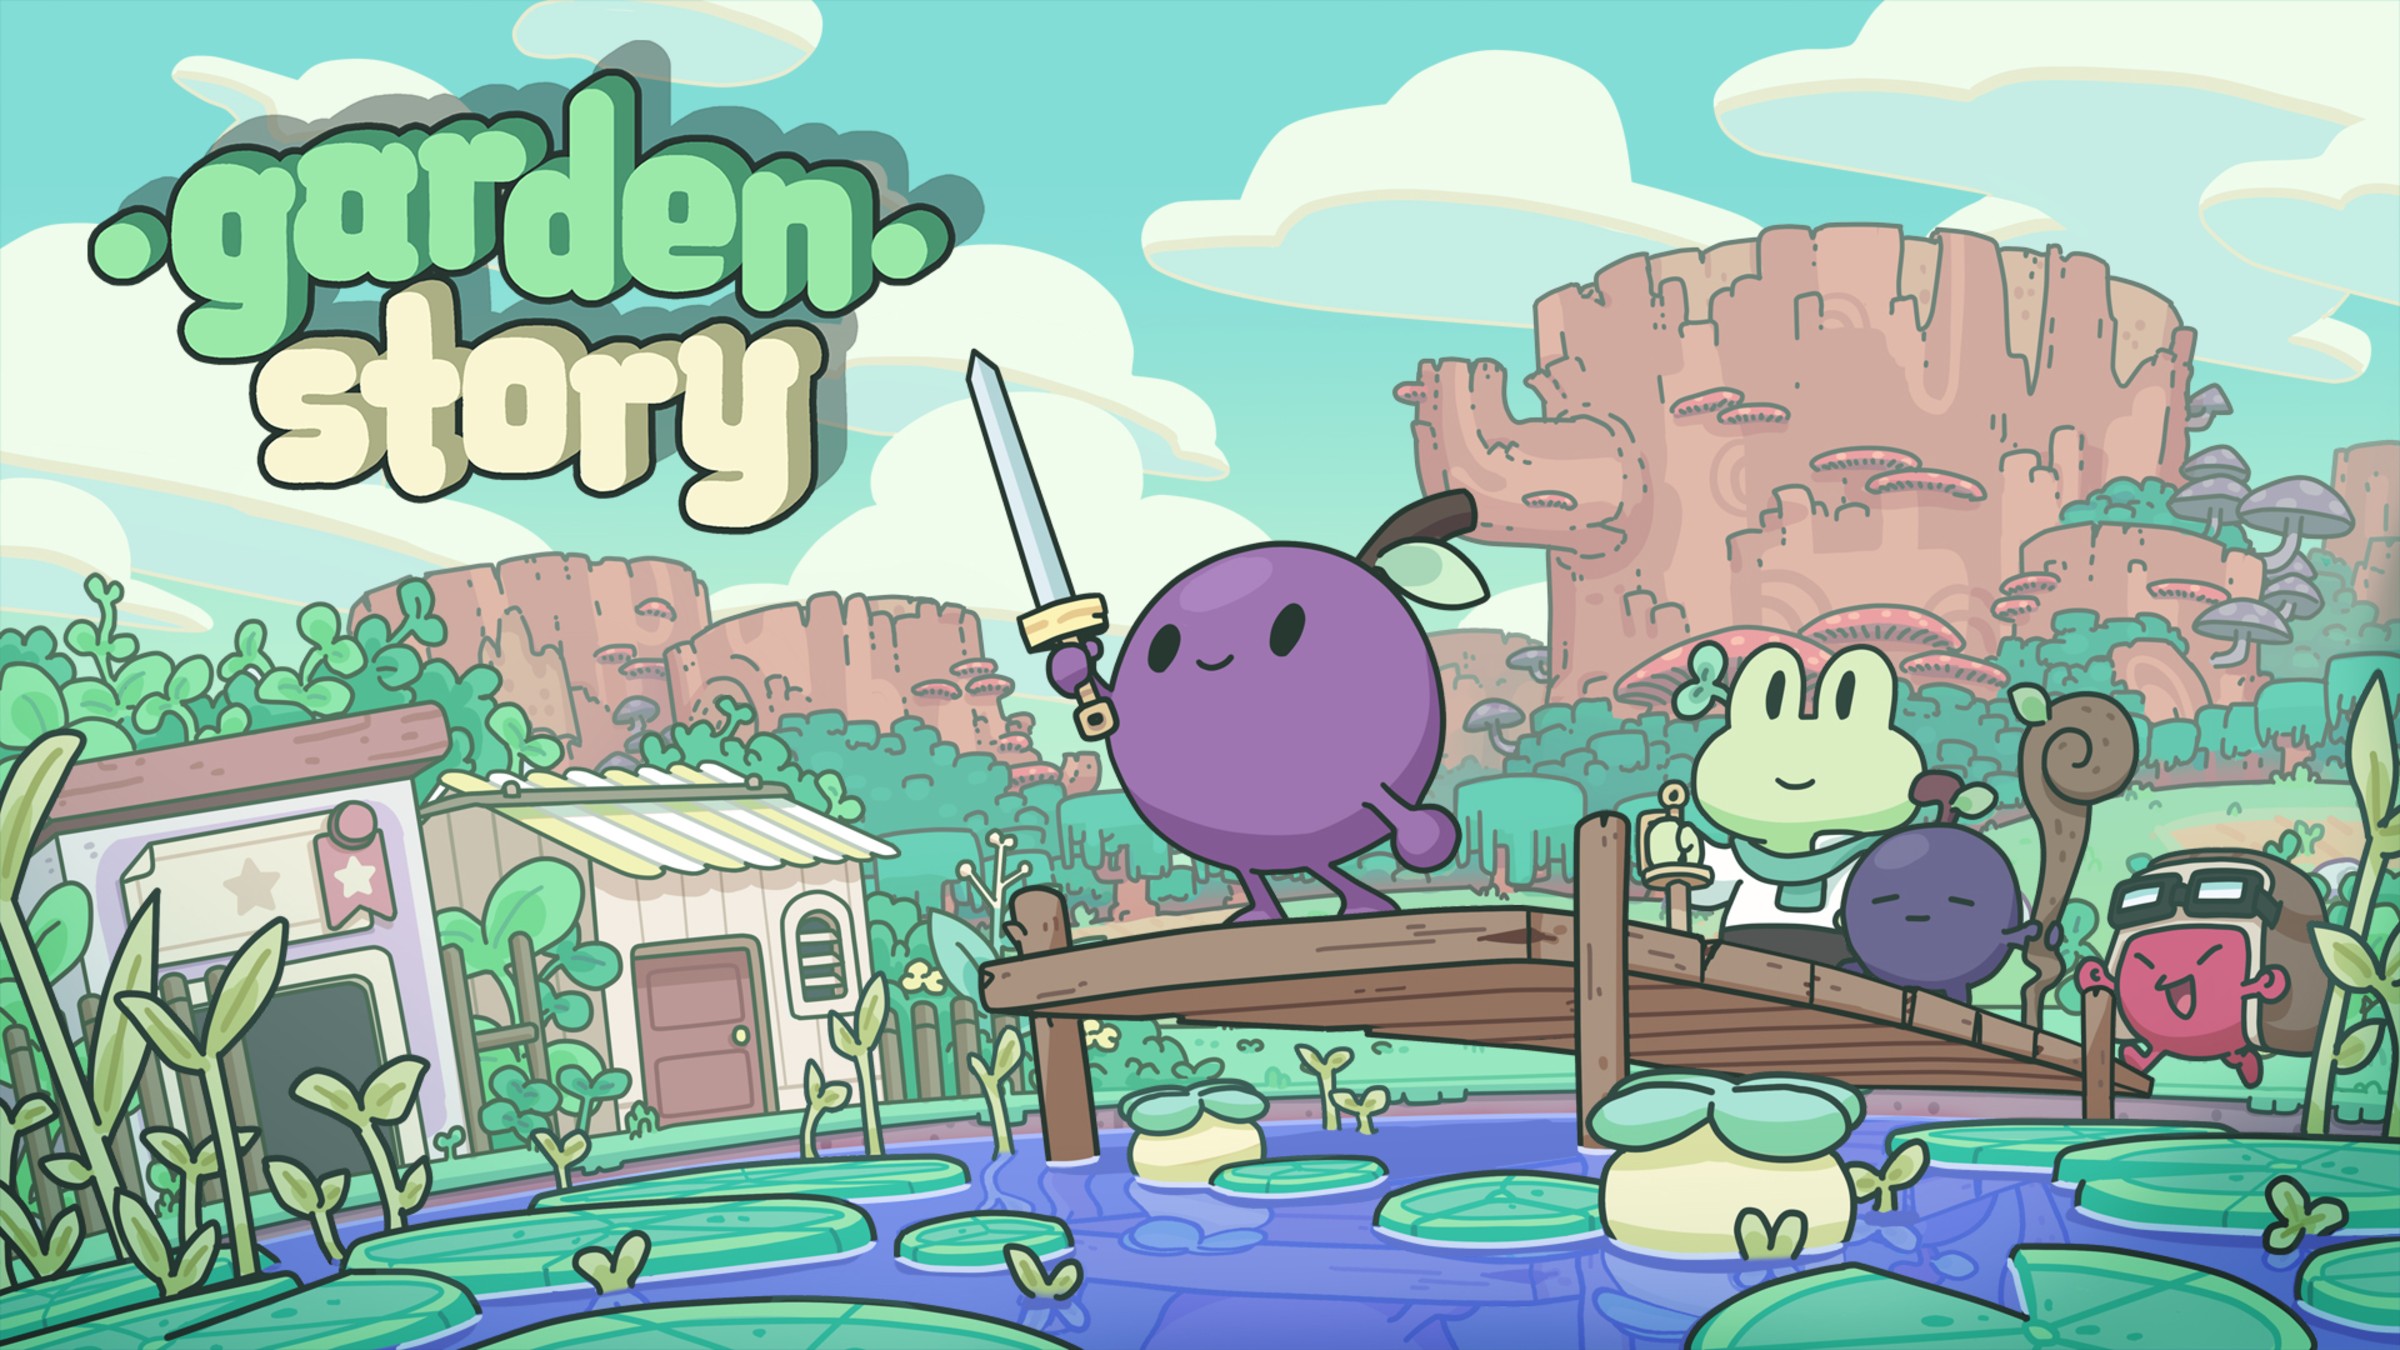 Don't Drop Off Your Kids Here  Garden of Banban (Gameplay) 